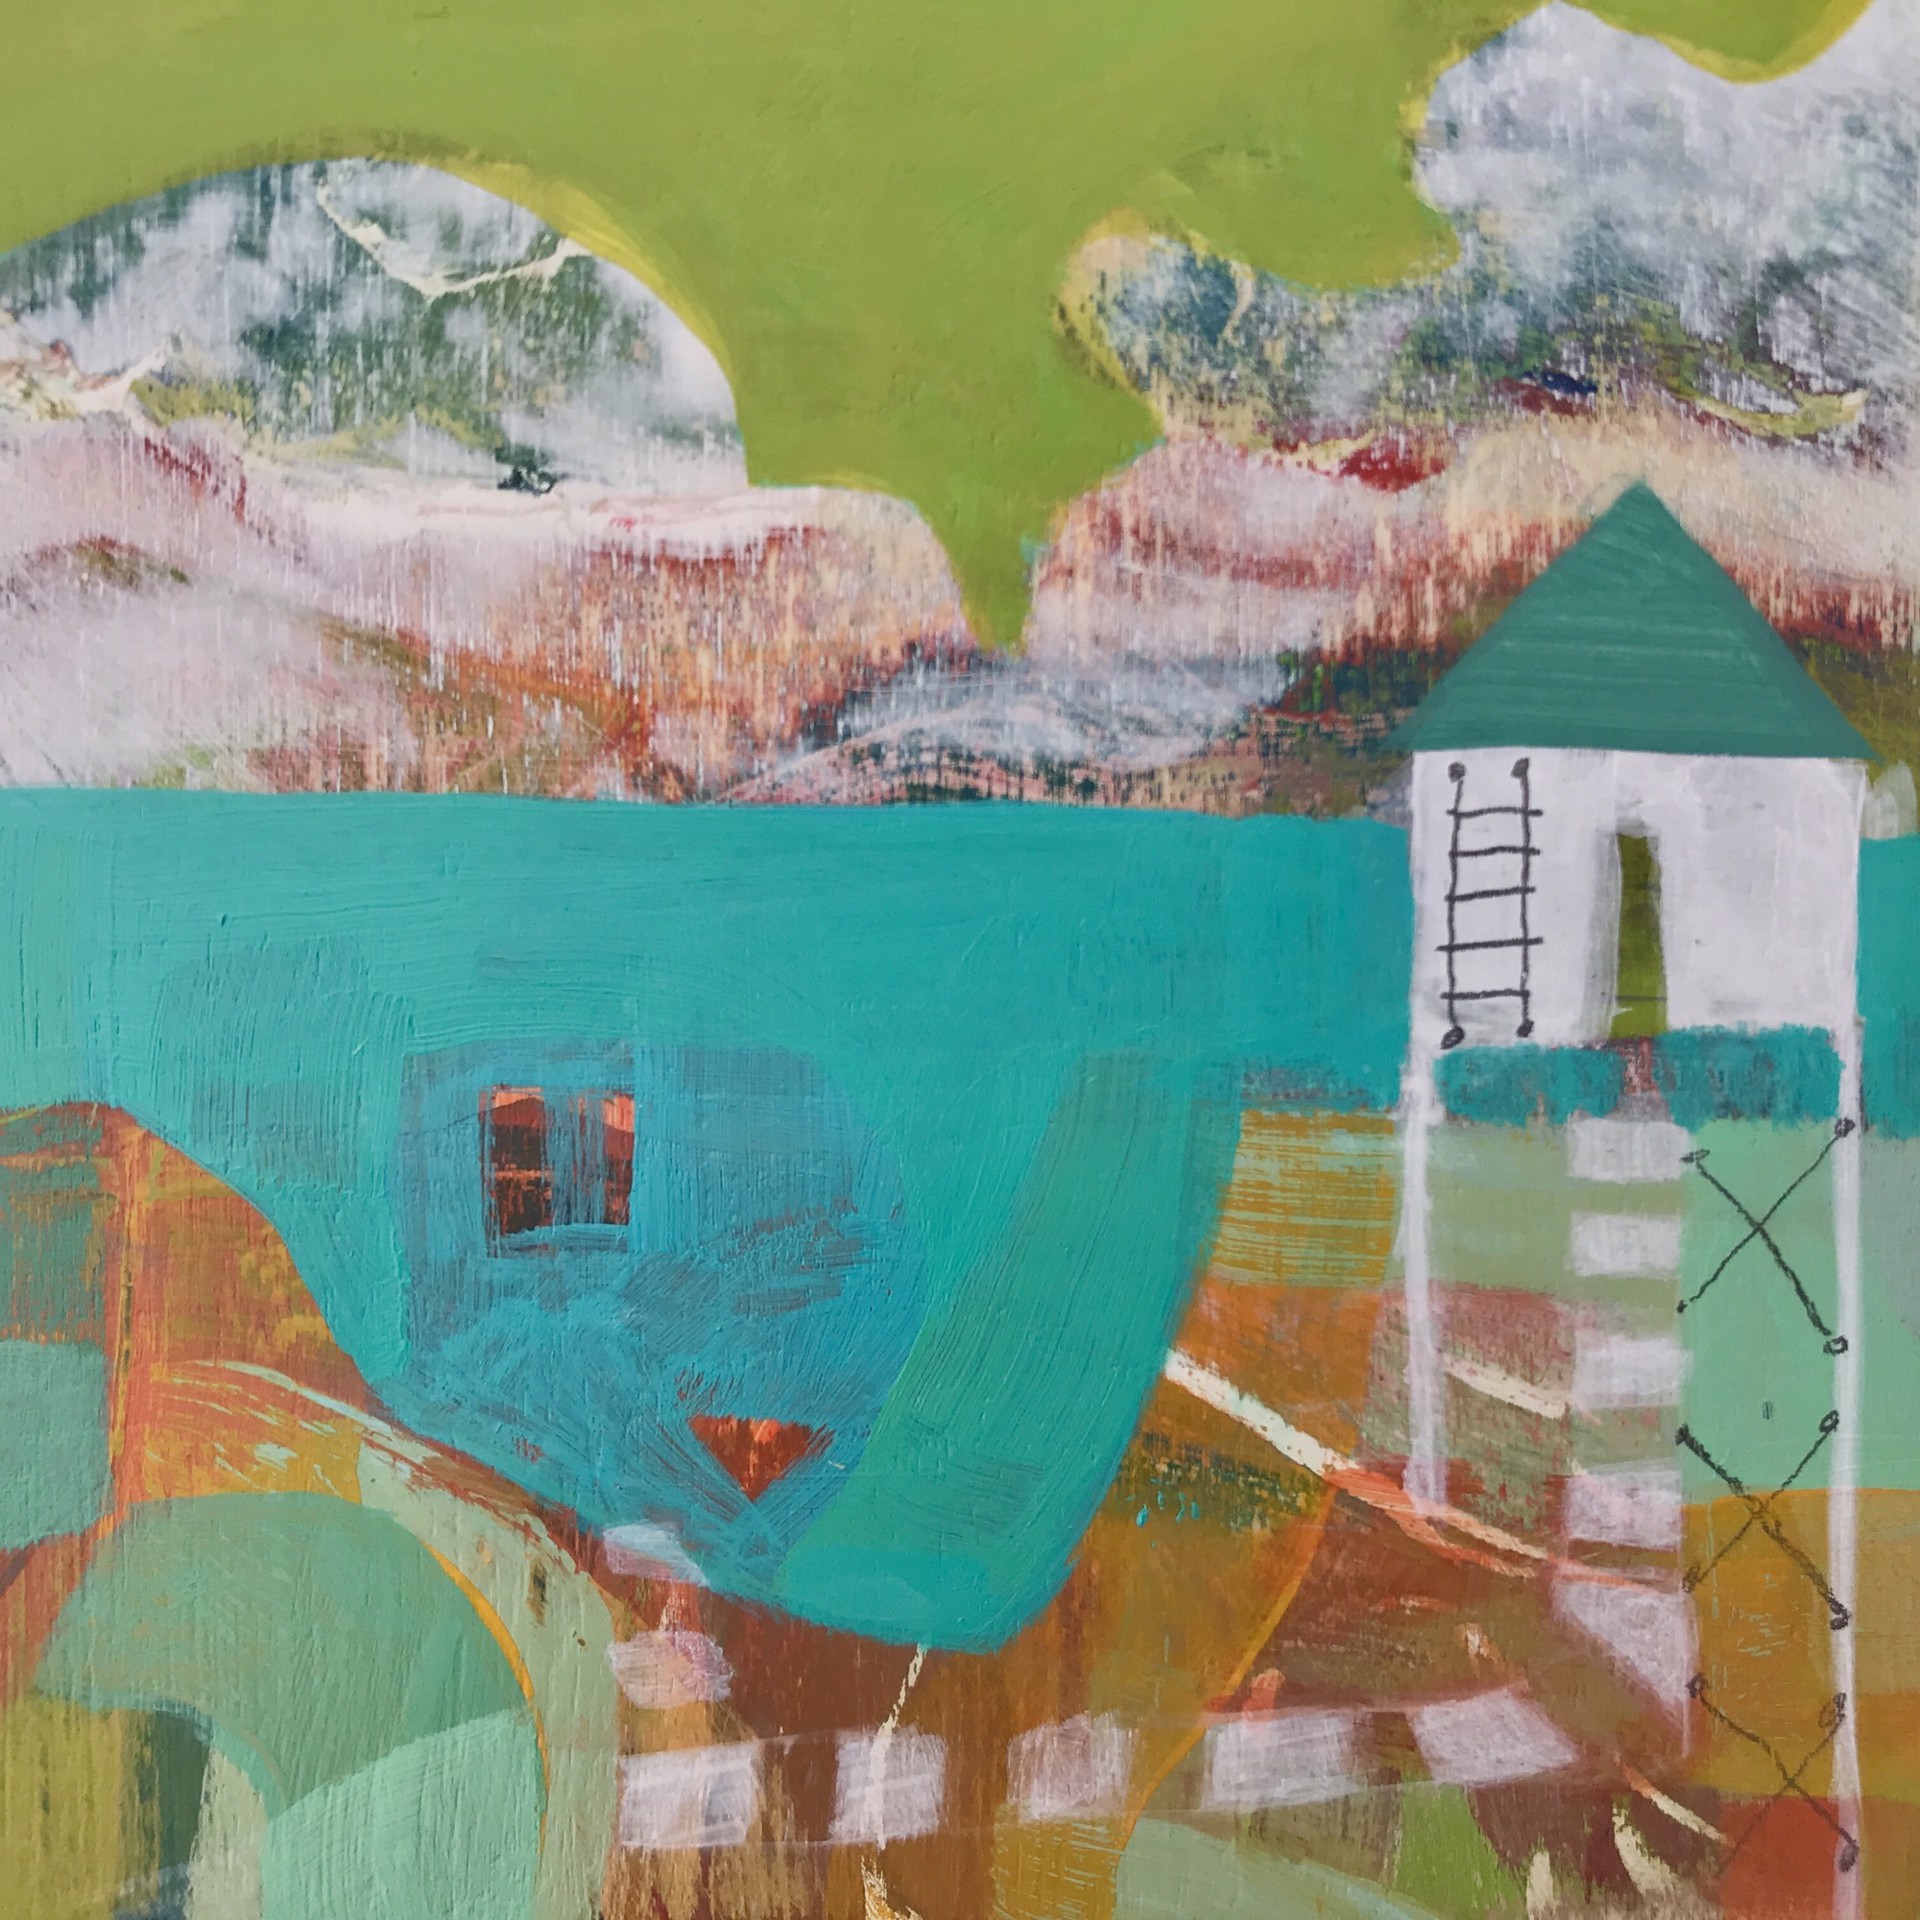 Stilts, Ladder and Green Door by Rachael Van Dyke